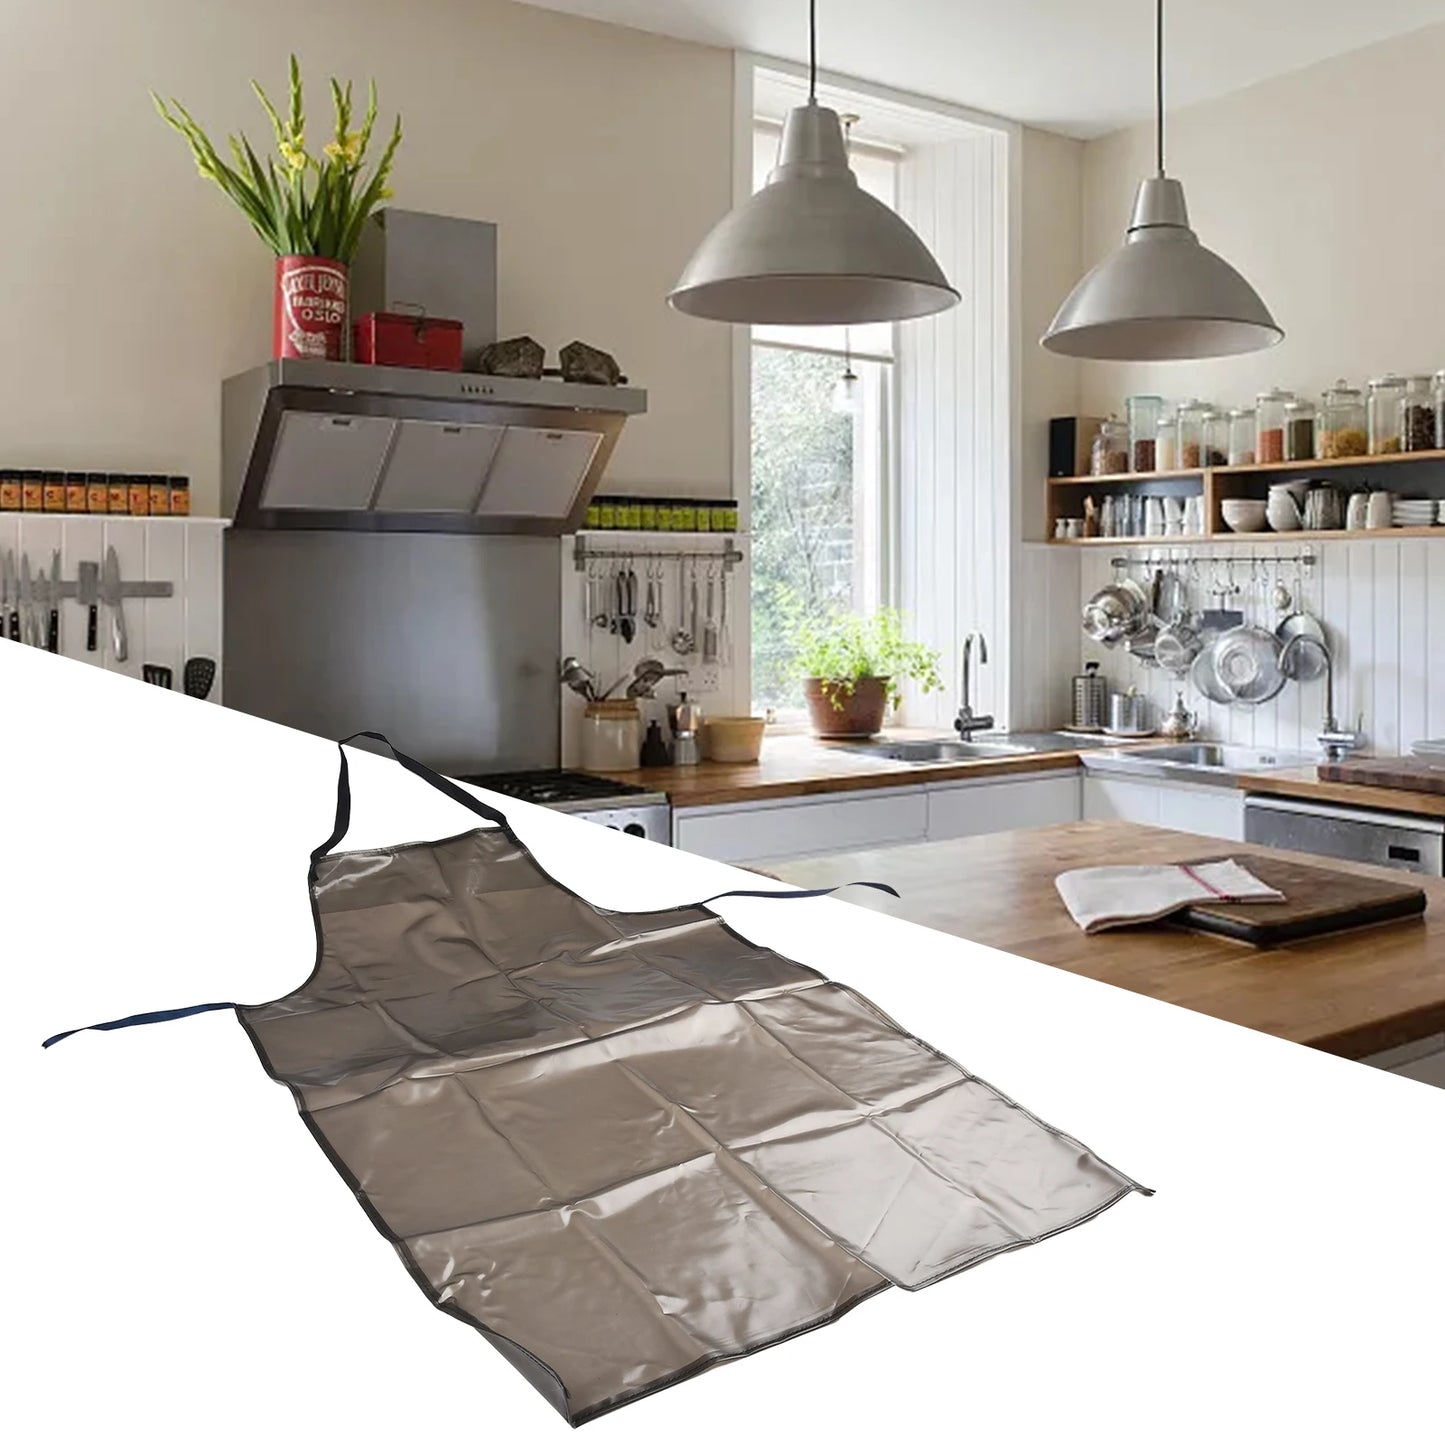 Waterproof Oilproof PVC Black Apron For Kitchen Waterproof Areas Work Cleaner Wipeable Oil Resistant Baking Accessories